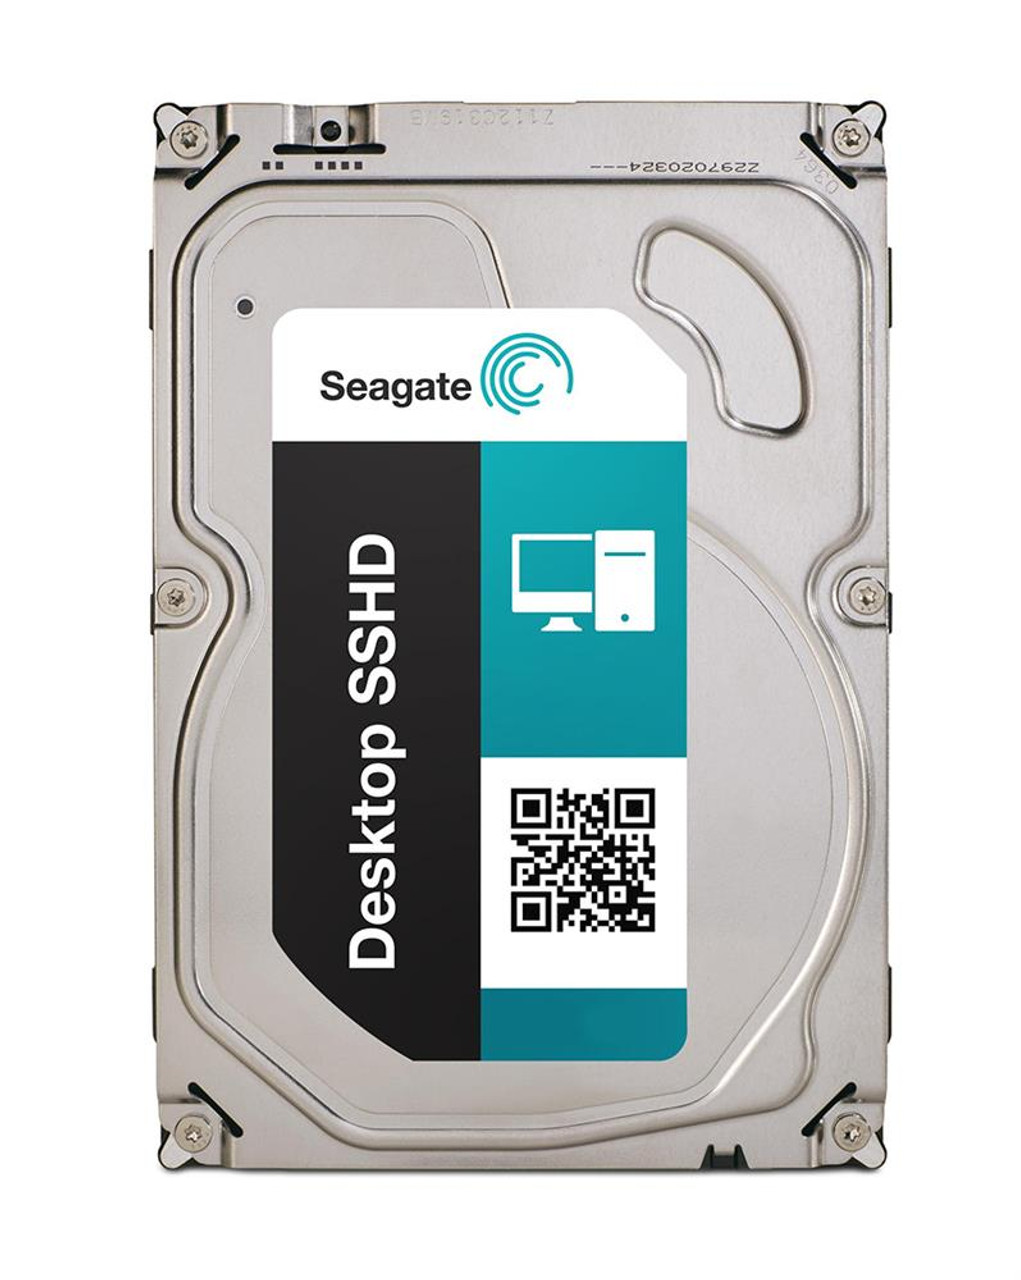 1C5168-999 Seagate Desktop SSHD 3TB 7200RPM SATA 6Gbps 64MB Cache 8GB SSD 3.5-inch Internal Hybrid Hard Drive